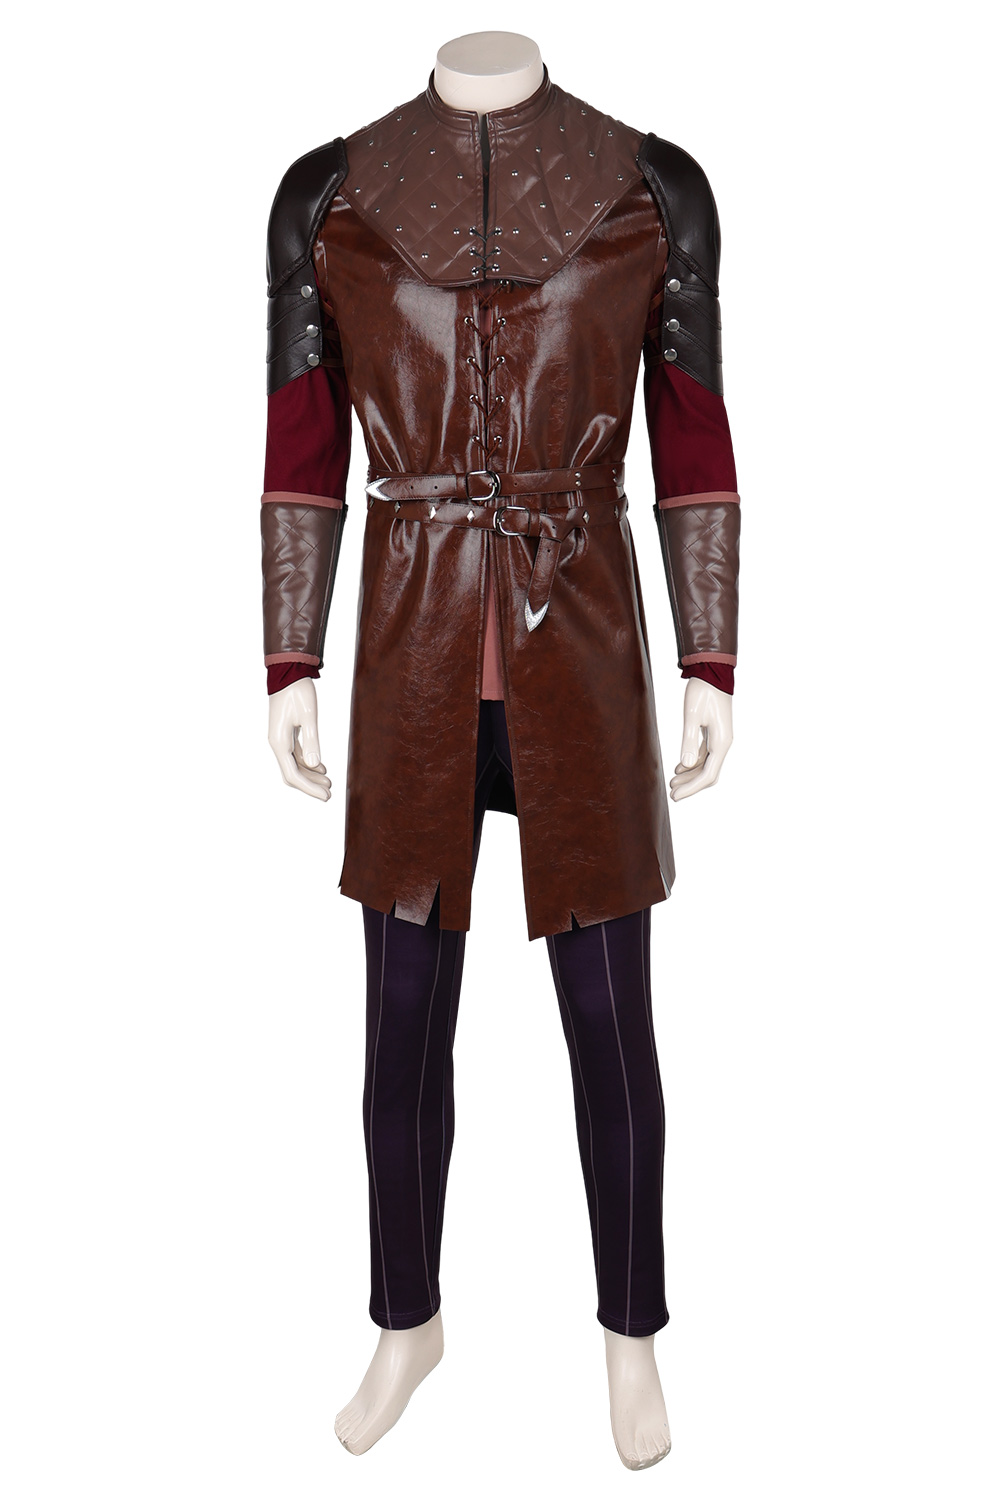 Game Baldur's Gate Astarion Vampire Battle Outfits Halloween Carnival Suit Cosplay Costume